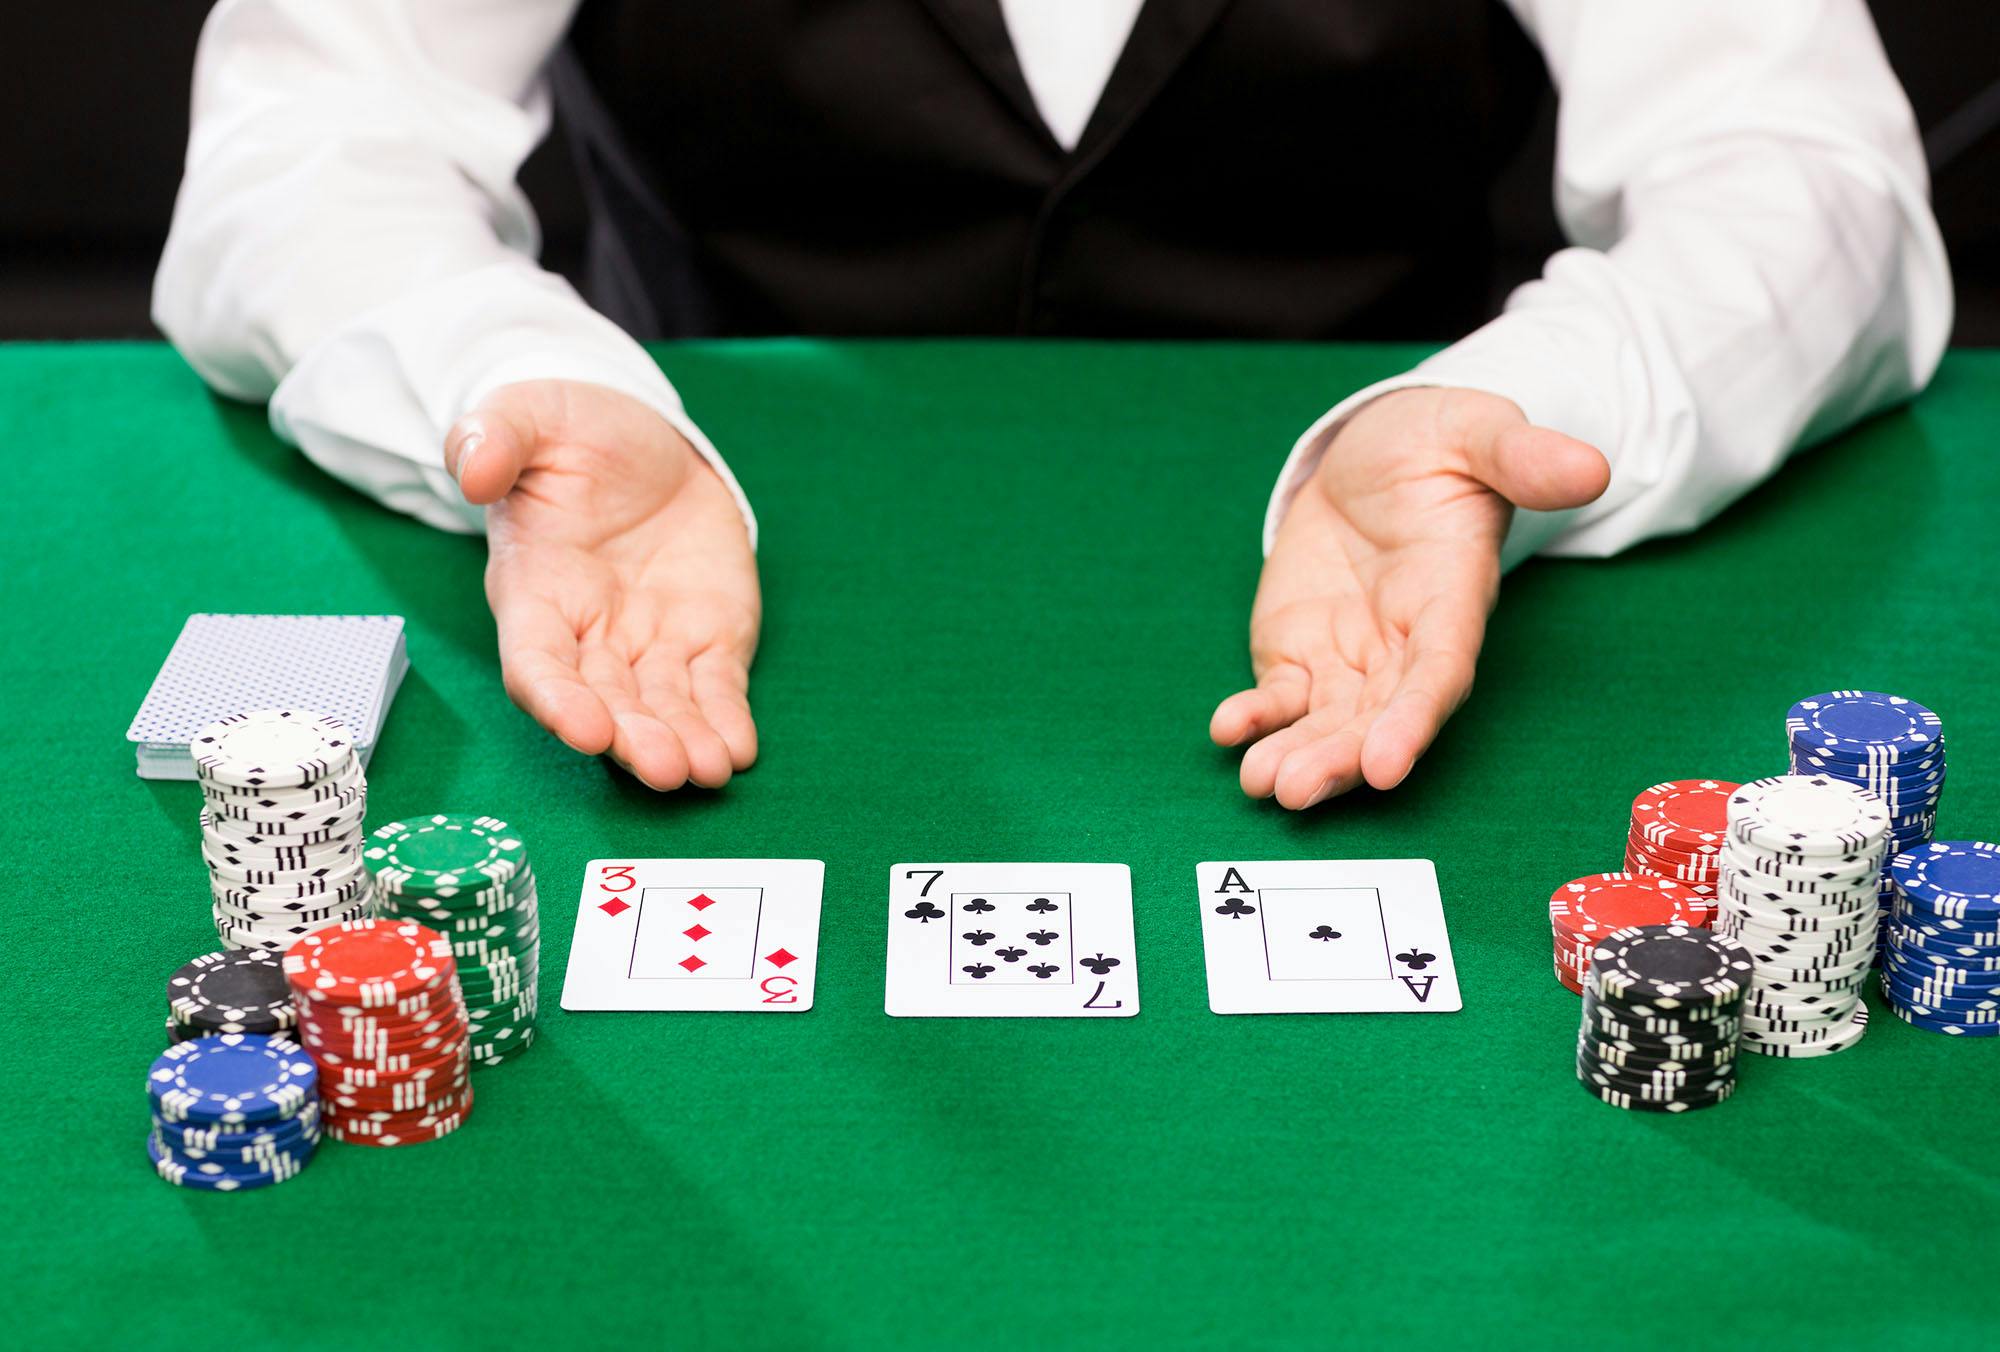 Ultimate Texas Hold'em— Rivers Casino Des Plaines